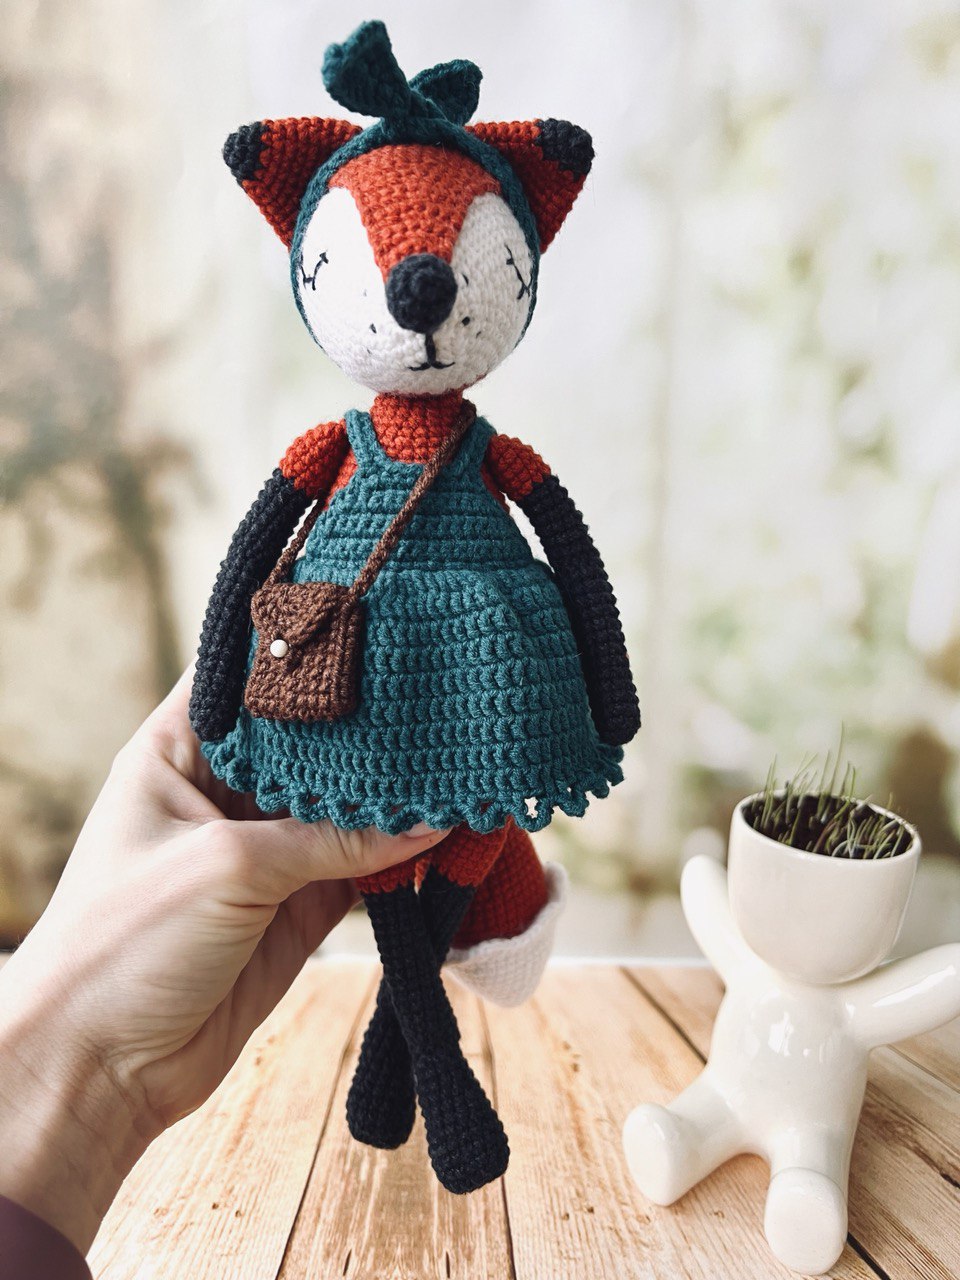 Apprendre le crochet – Lise and Stitch